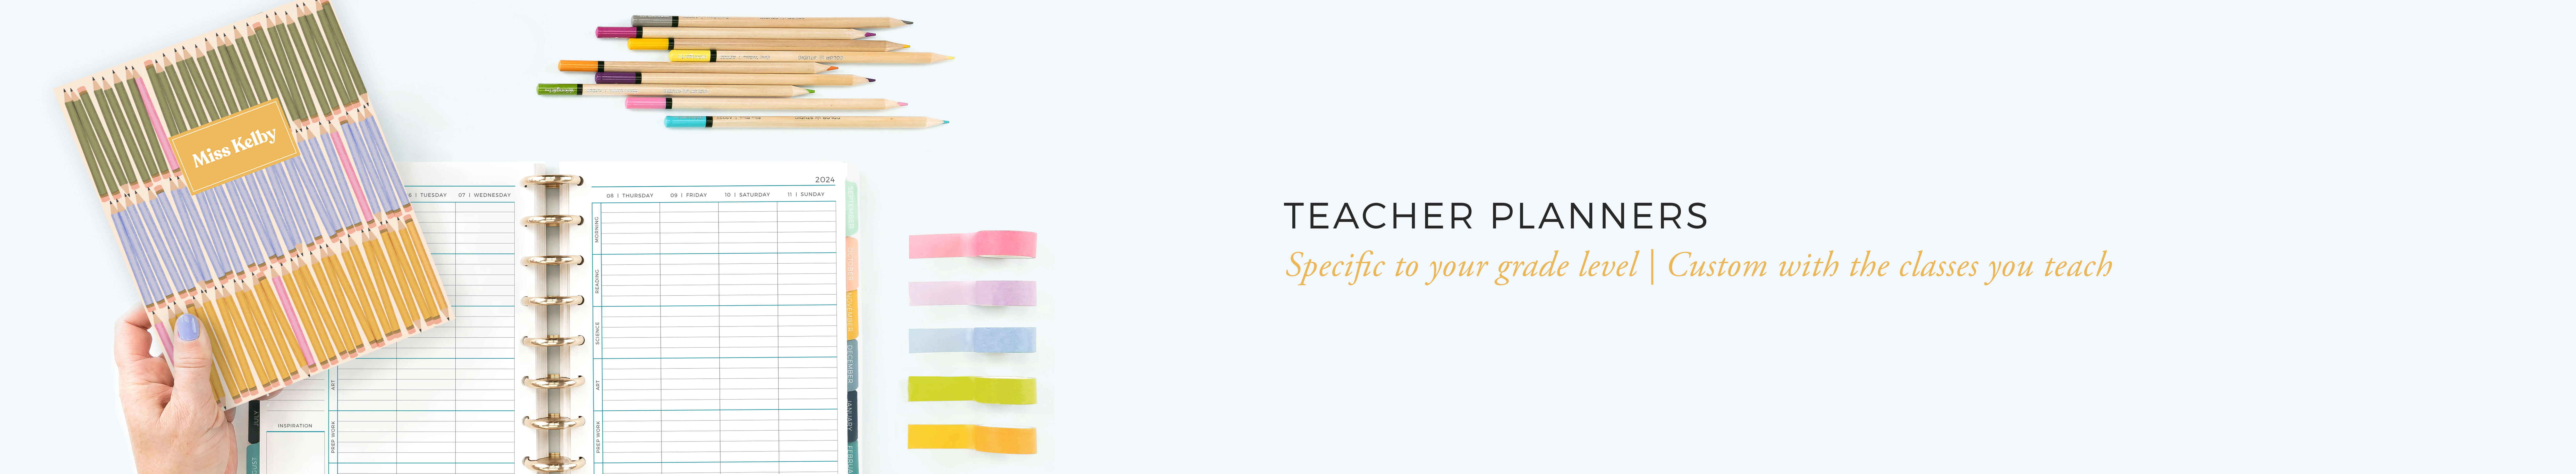 How I made my Custom Teacher Planner - The Meaningful Teacher